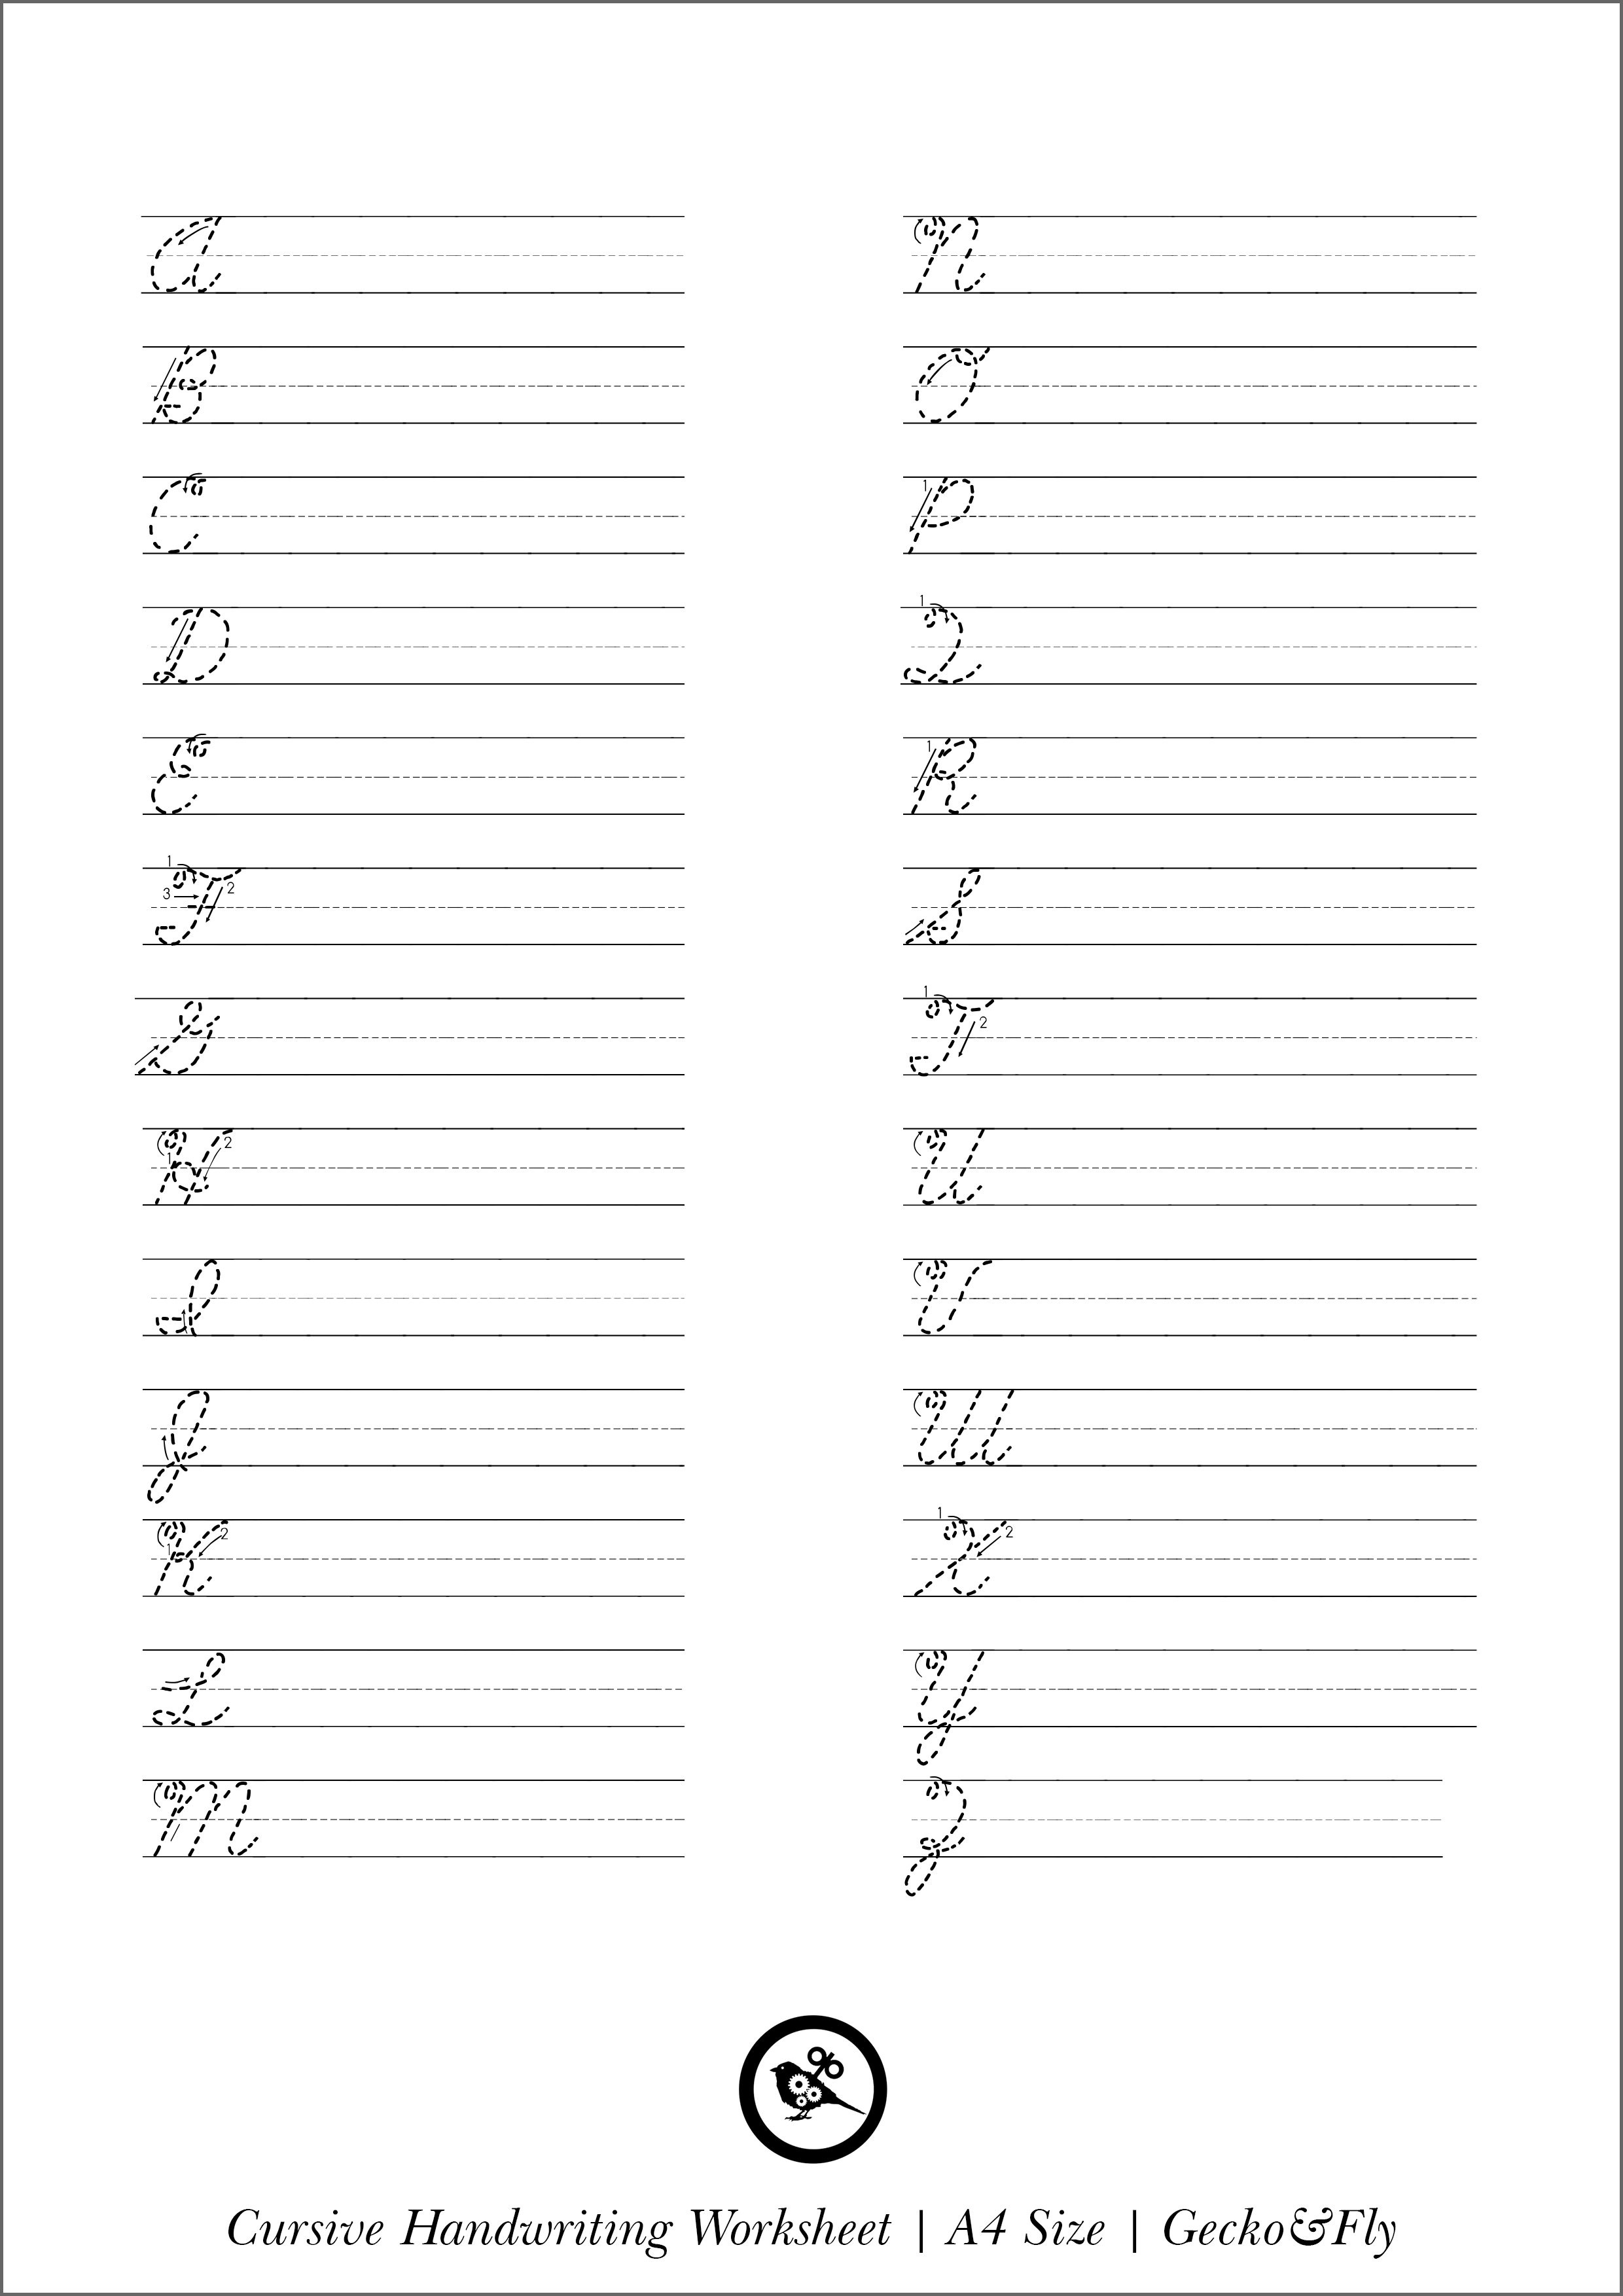 5 Printable Cursive Handwriting Worksheets For Beautiful Penmanship - Free Printable Cursive Handwriting Worksheets